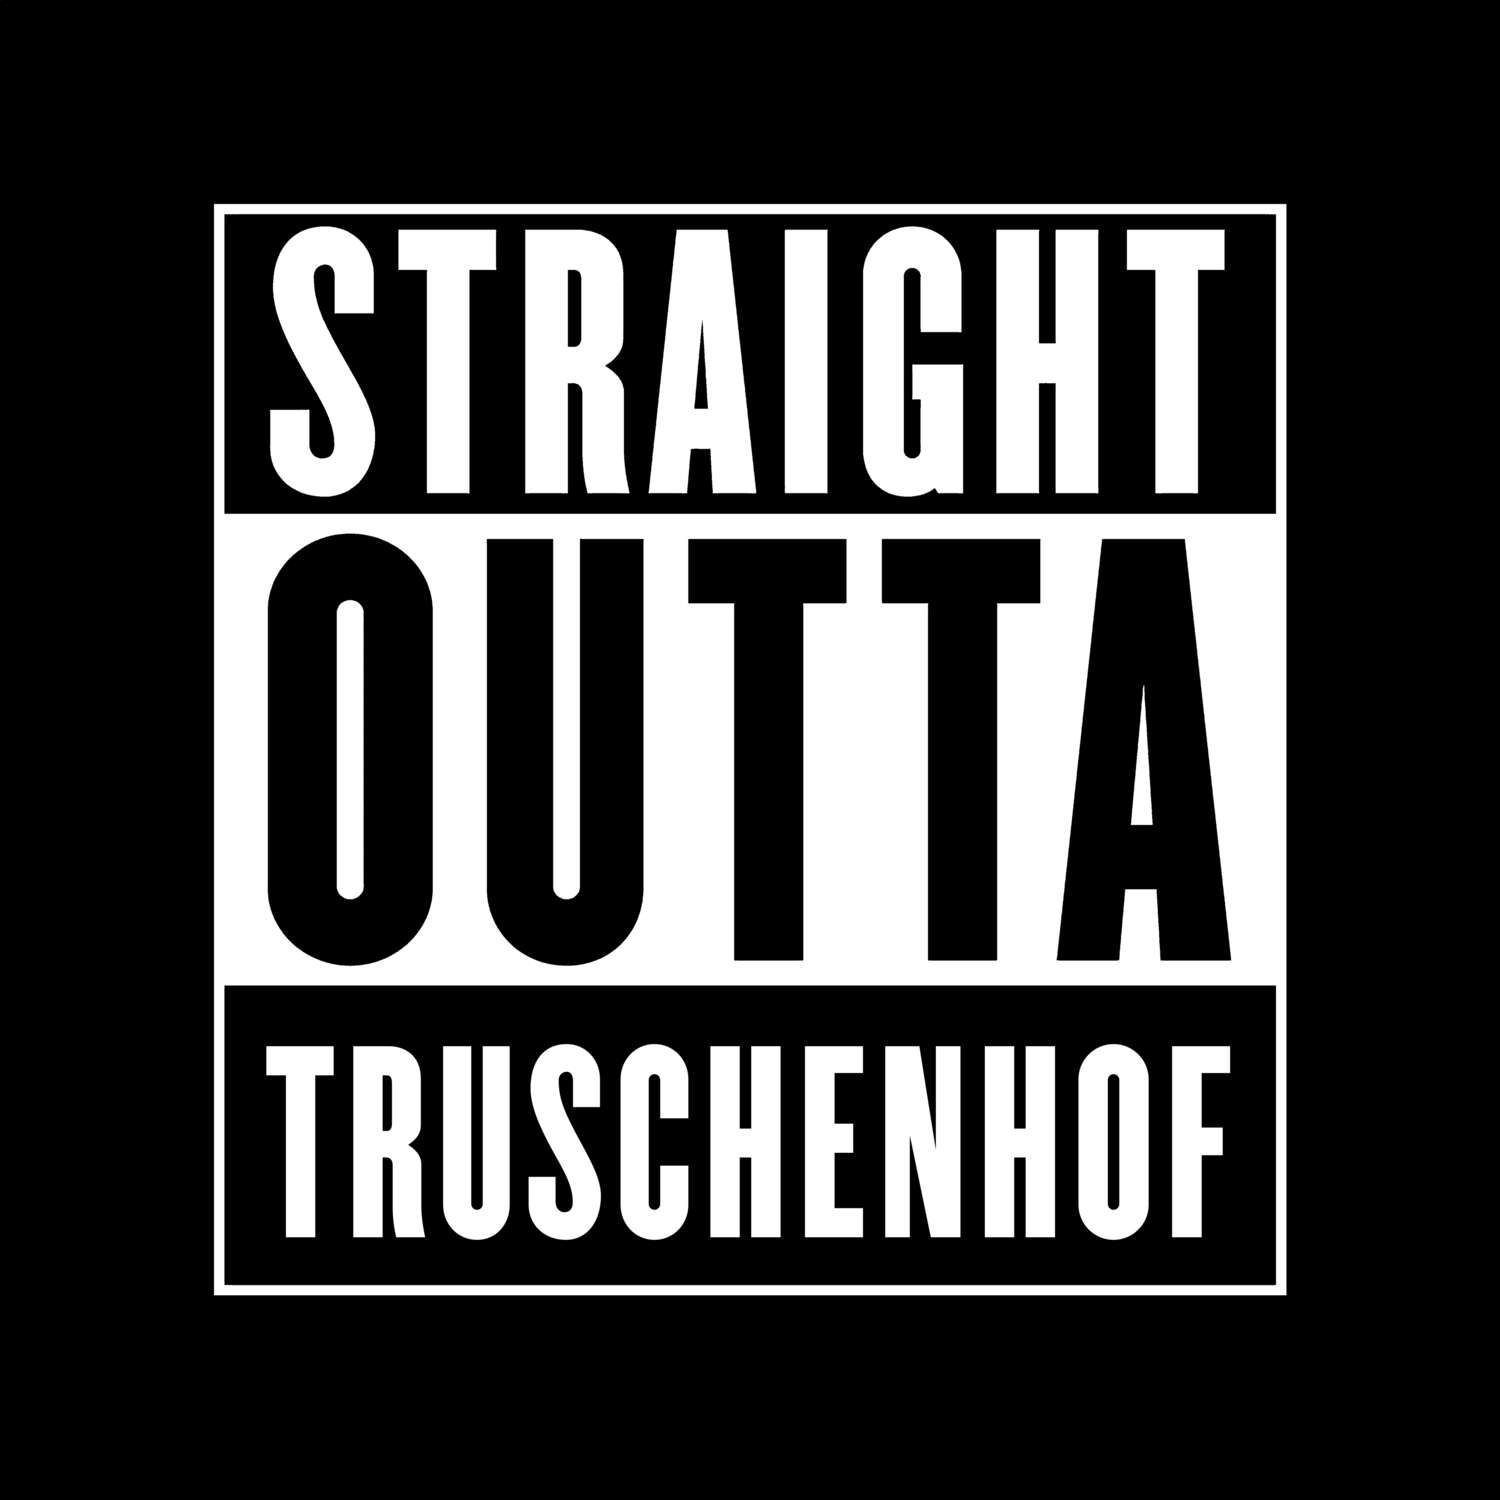 Truschenhof T-Shirt »Straight Outta«